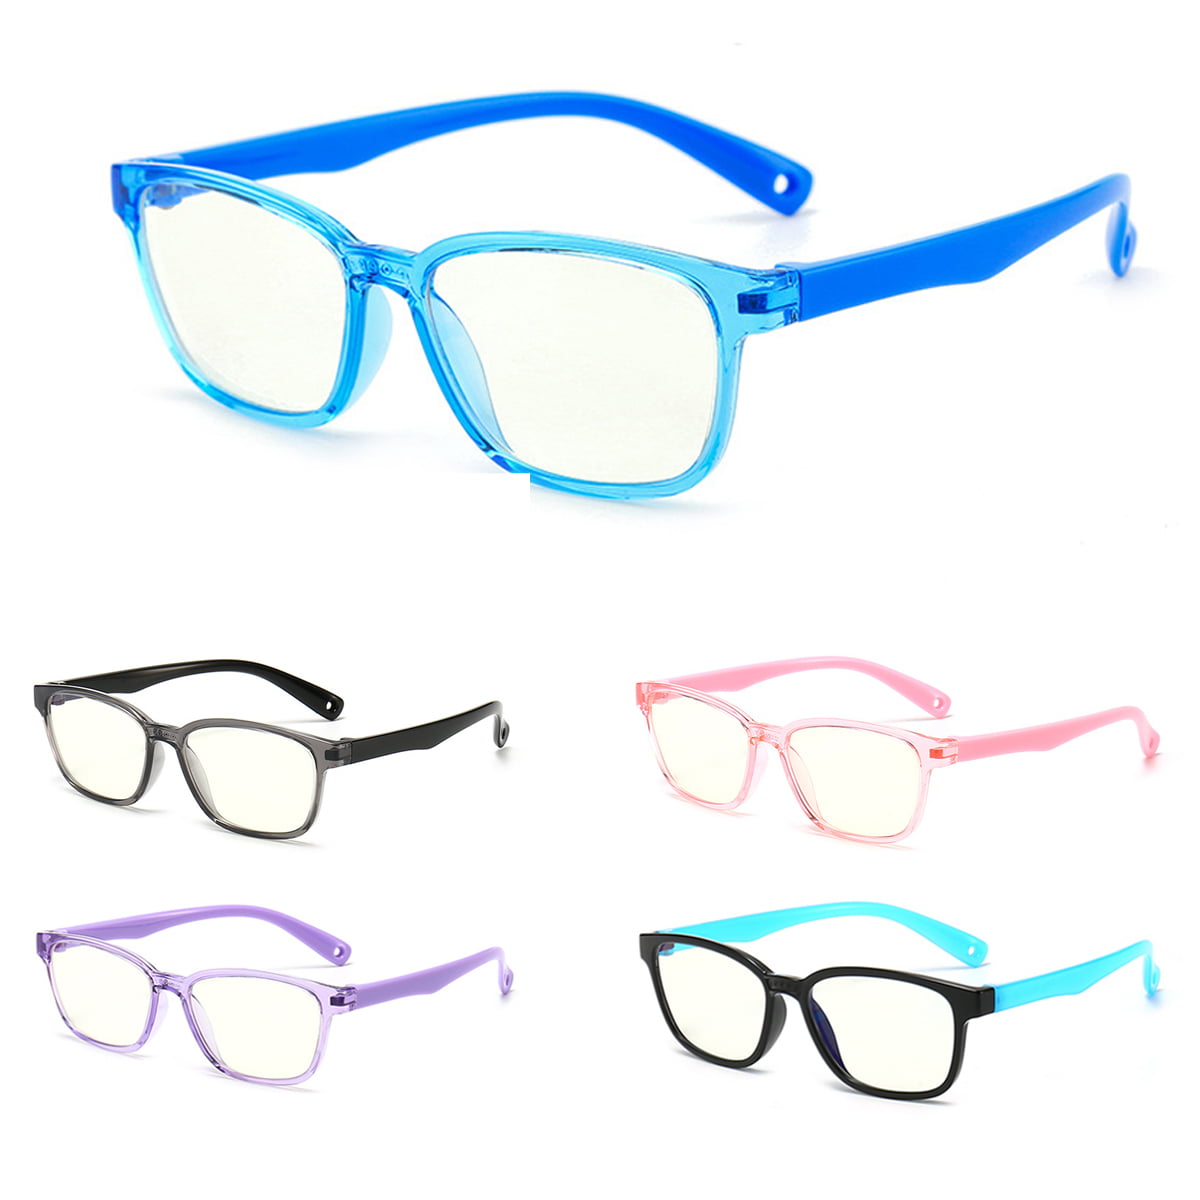 DefenderShield Premium Blue Light Blocking Glasses - 2 in 1 Snap Clip-On  for Day/Night - Readers for Computer, Mobile, Gaming, Sleep, Anti  Eyestrain